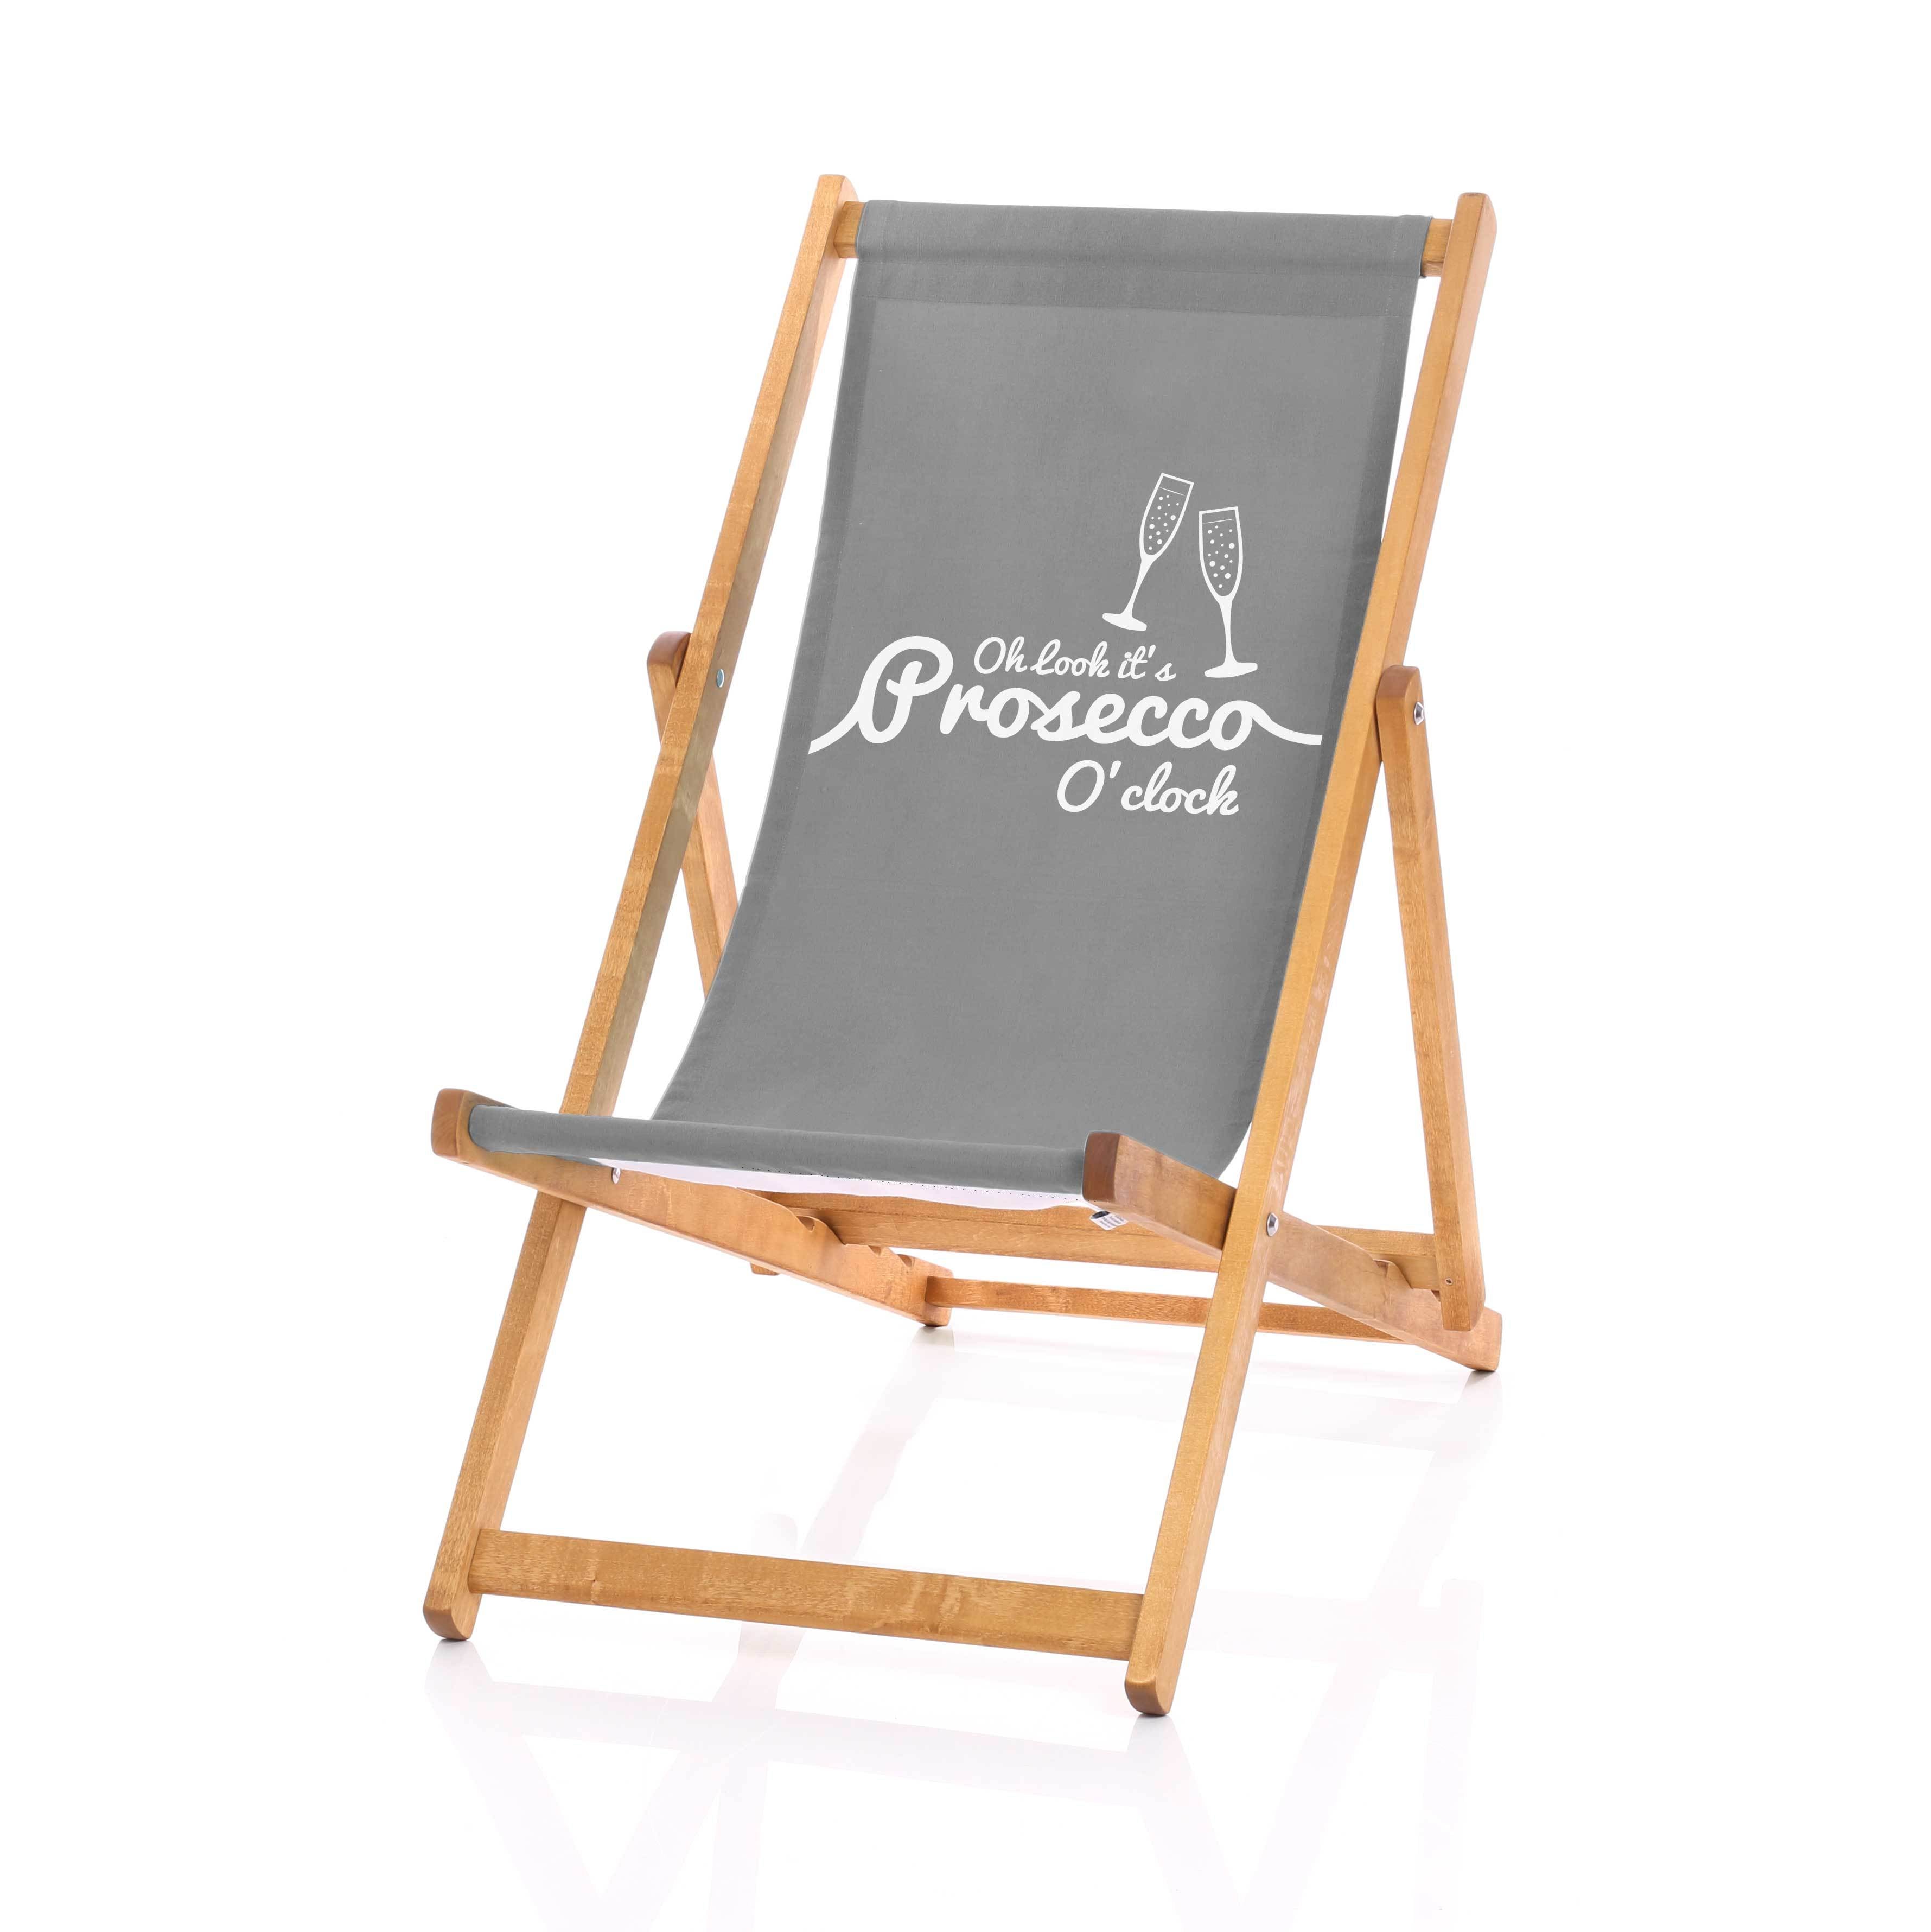 Hardwood Deckchairs - Prosecco